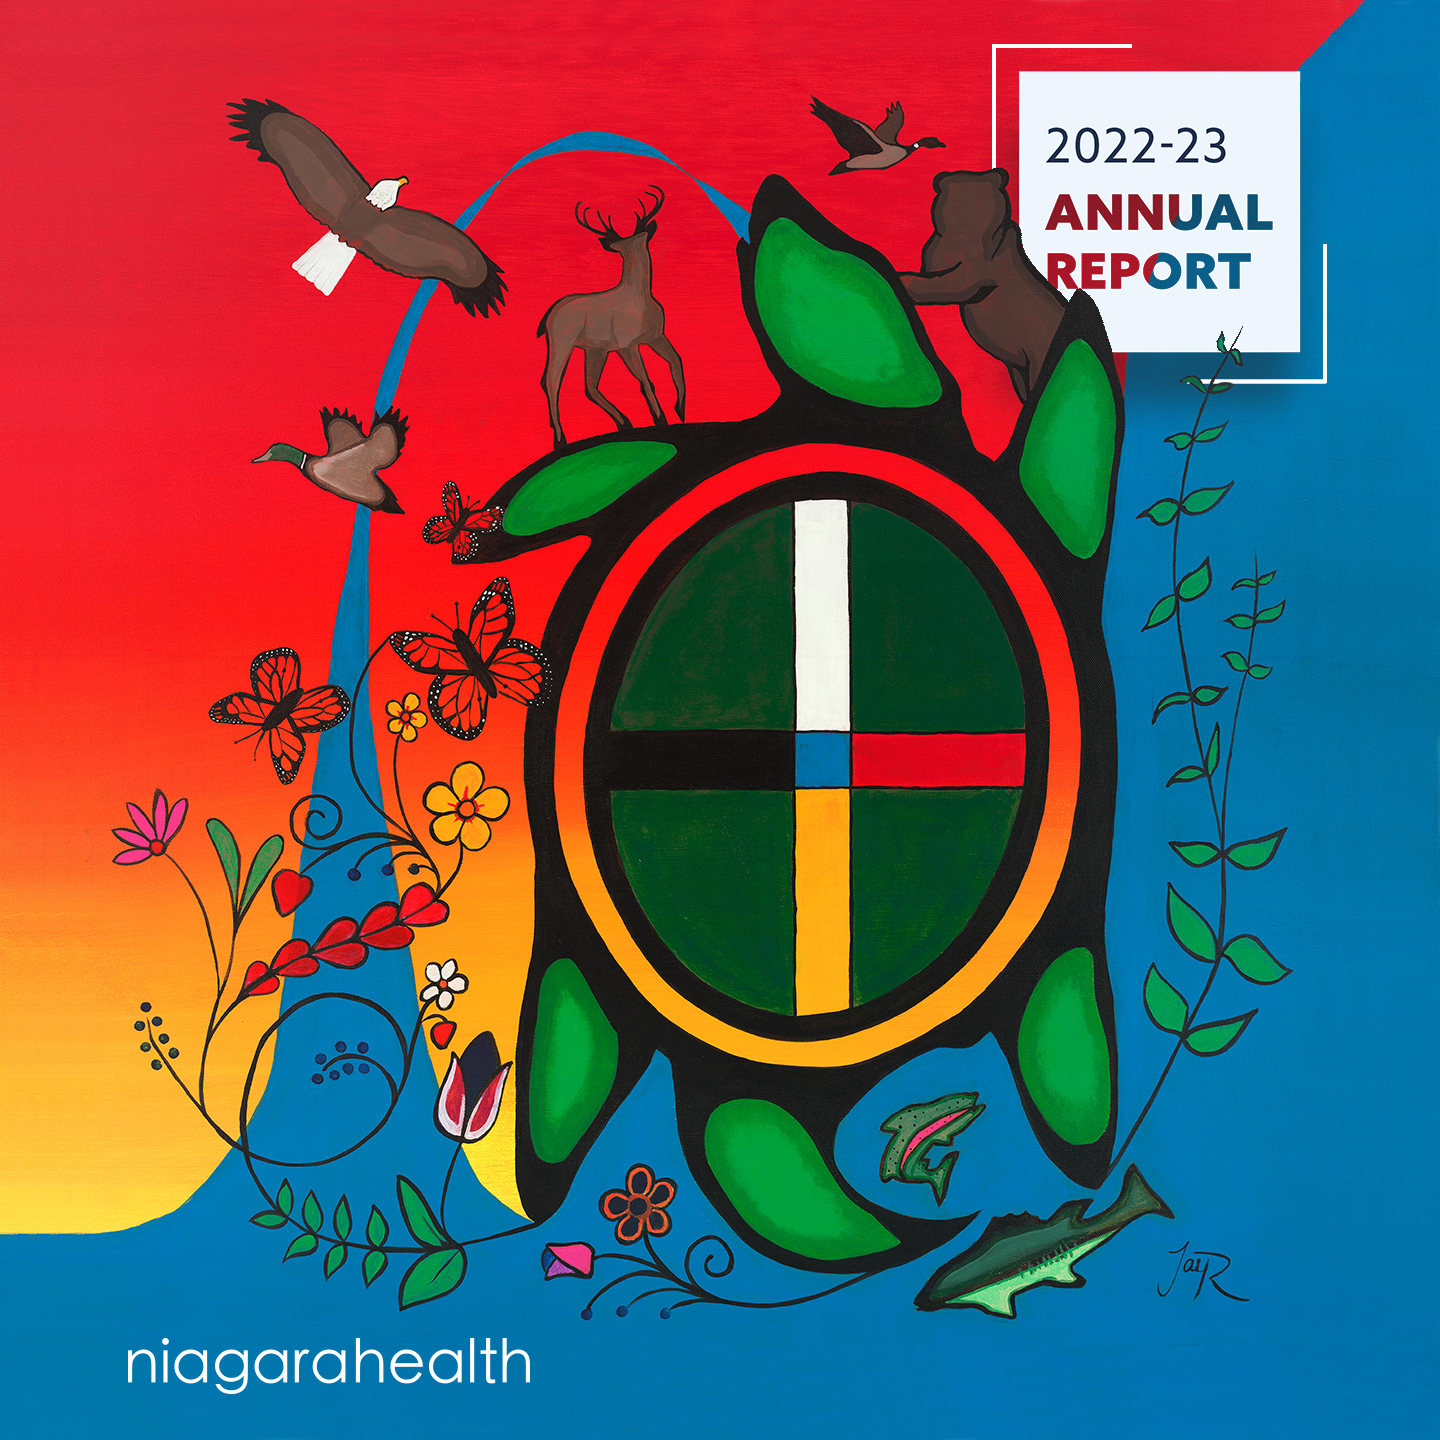 Niagara Health's Annual Report 2022-23